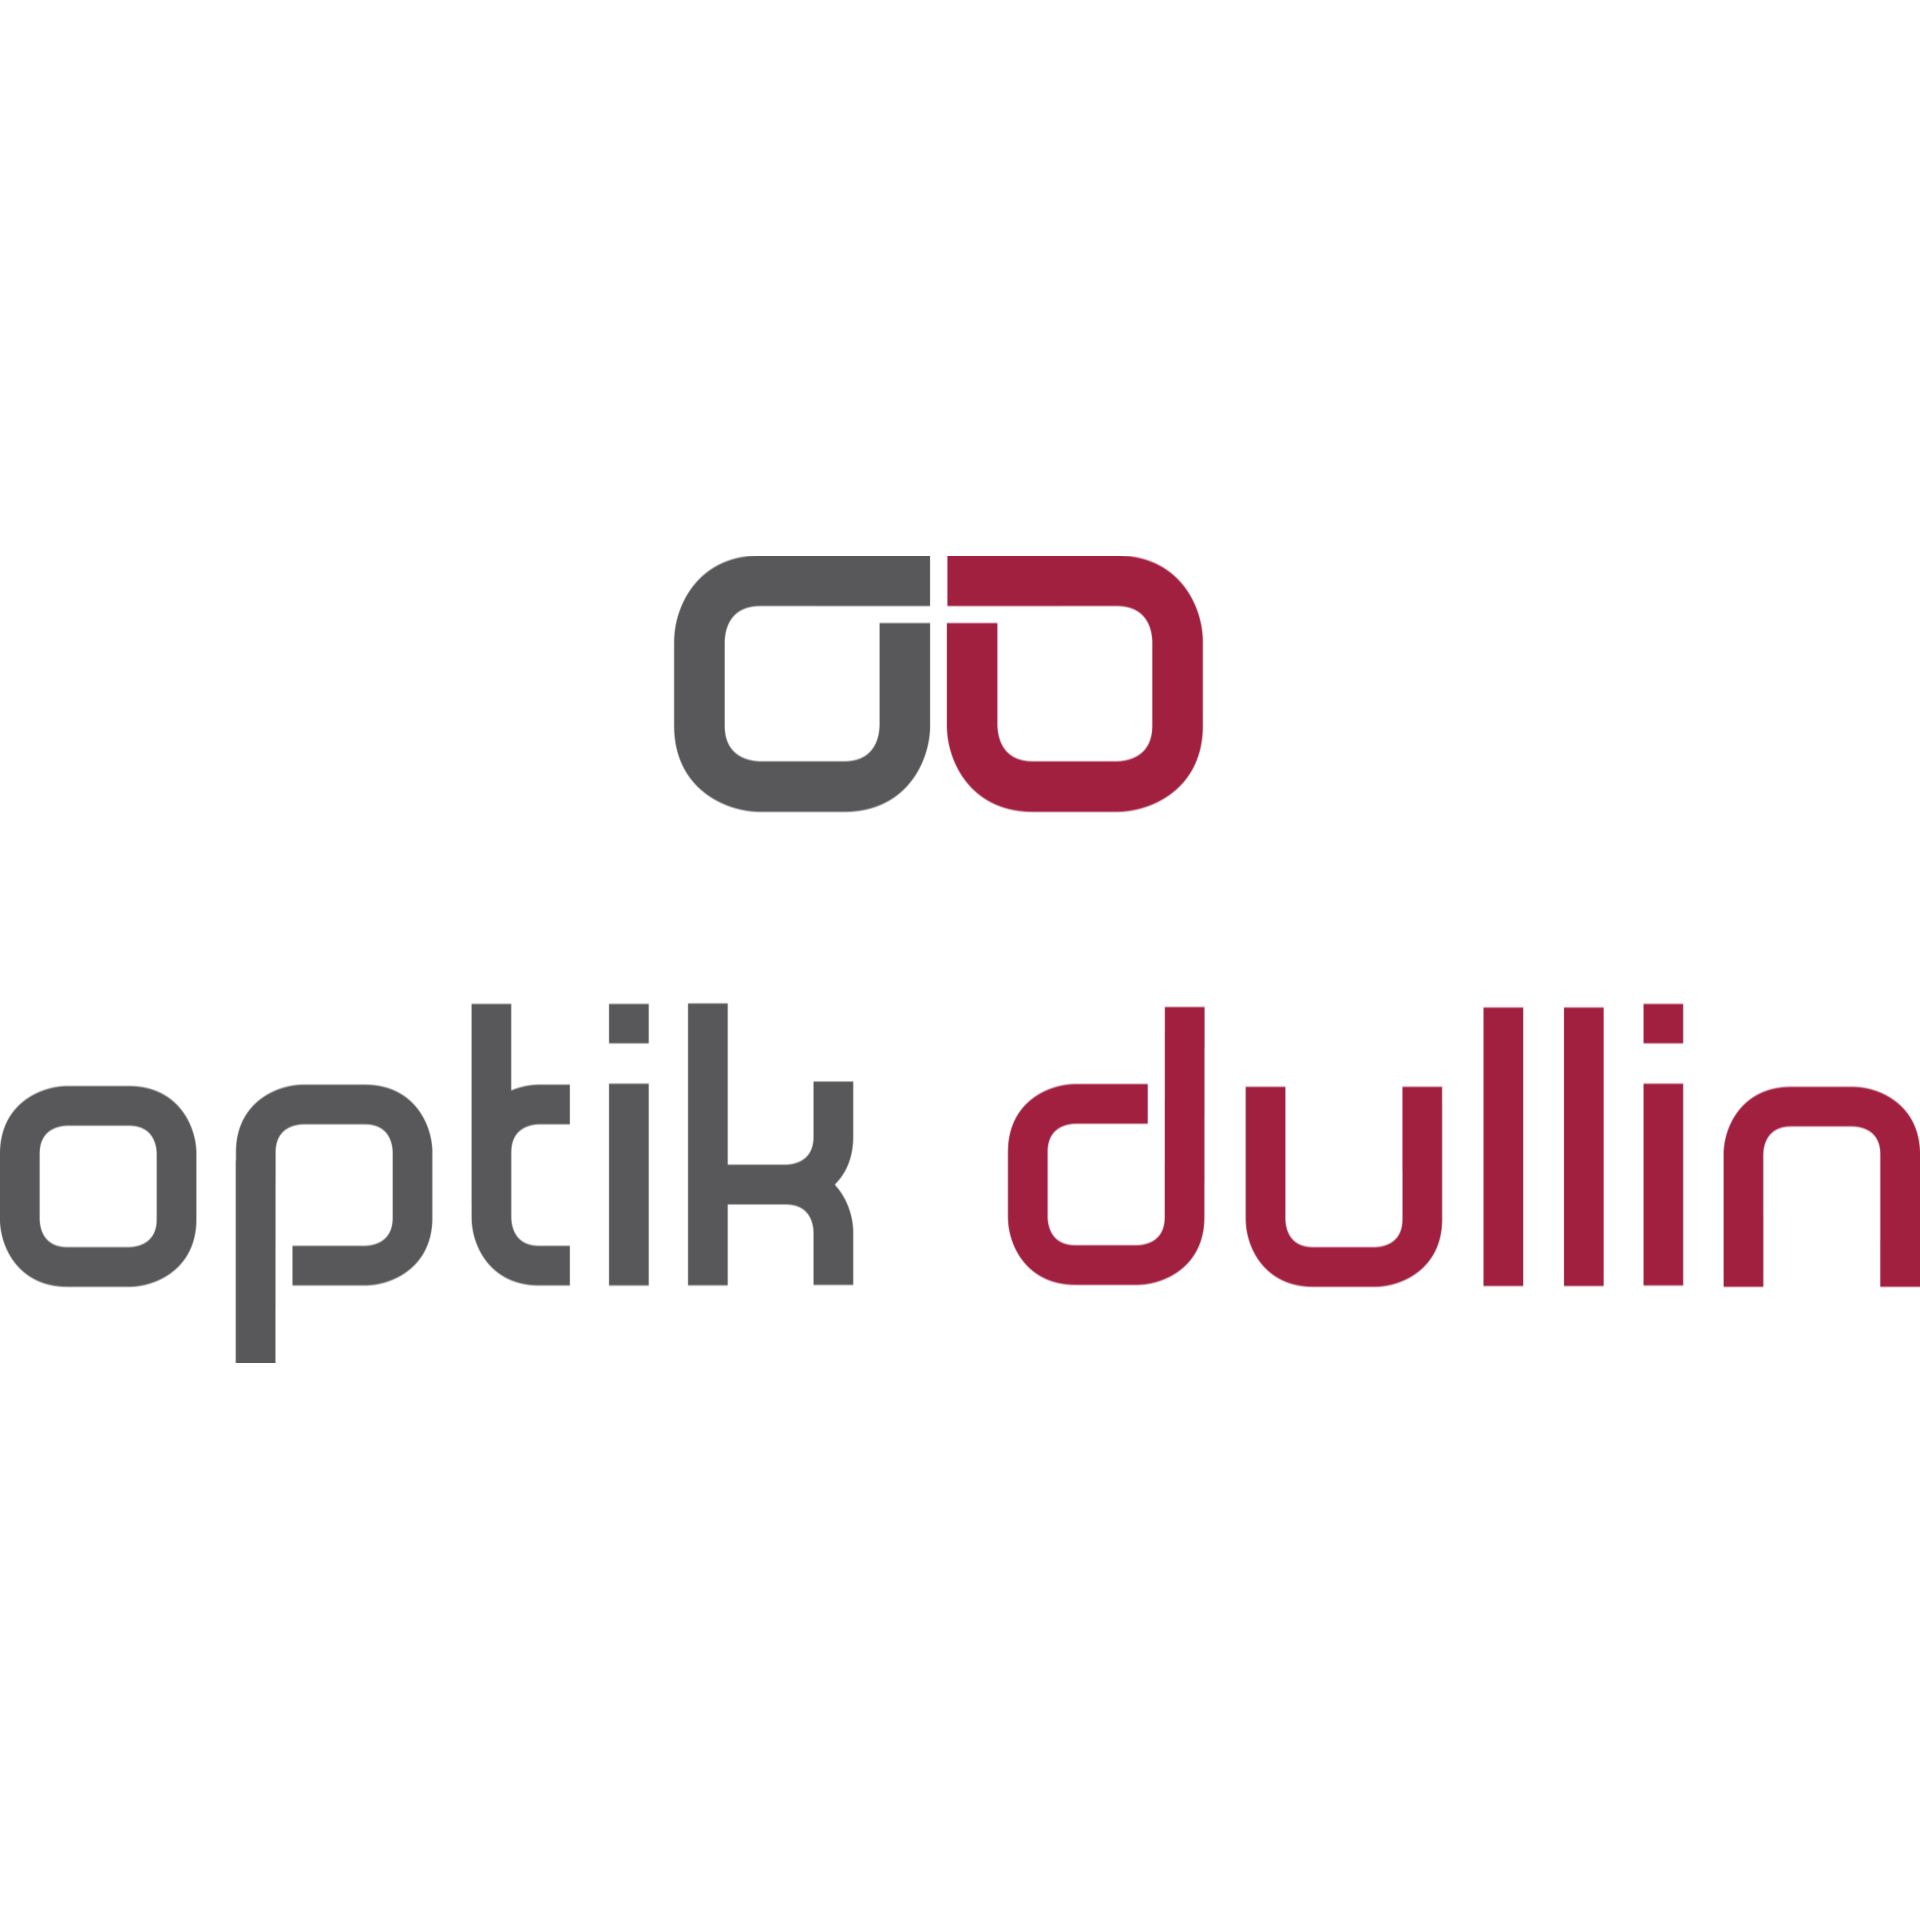 Logo Optik Dullin